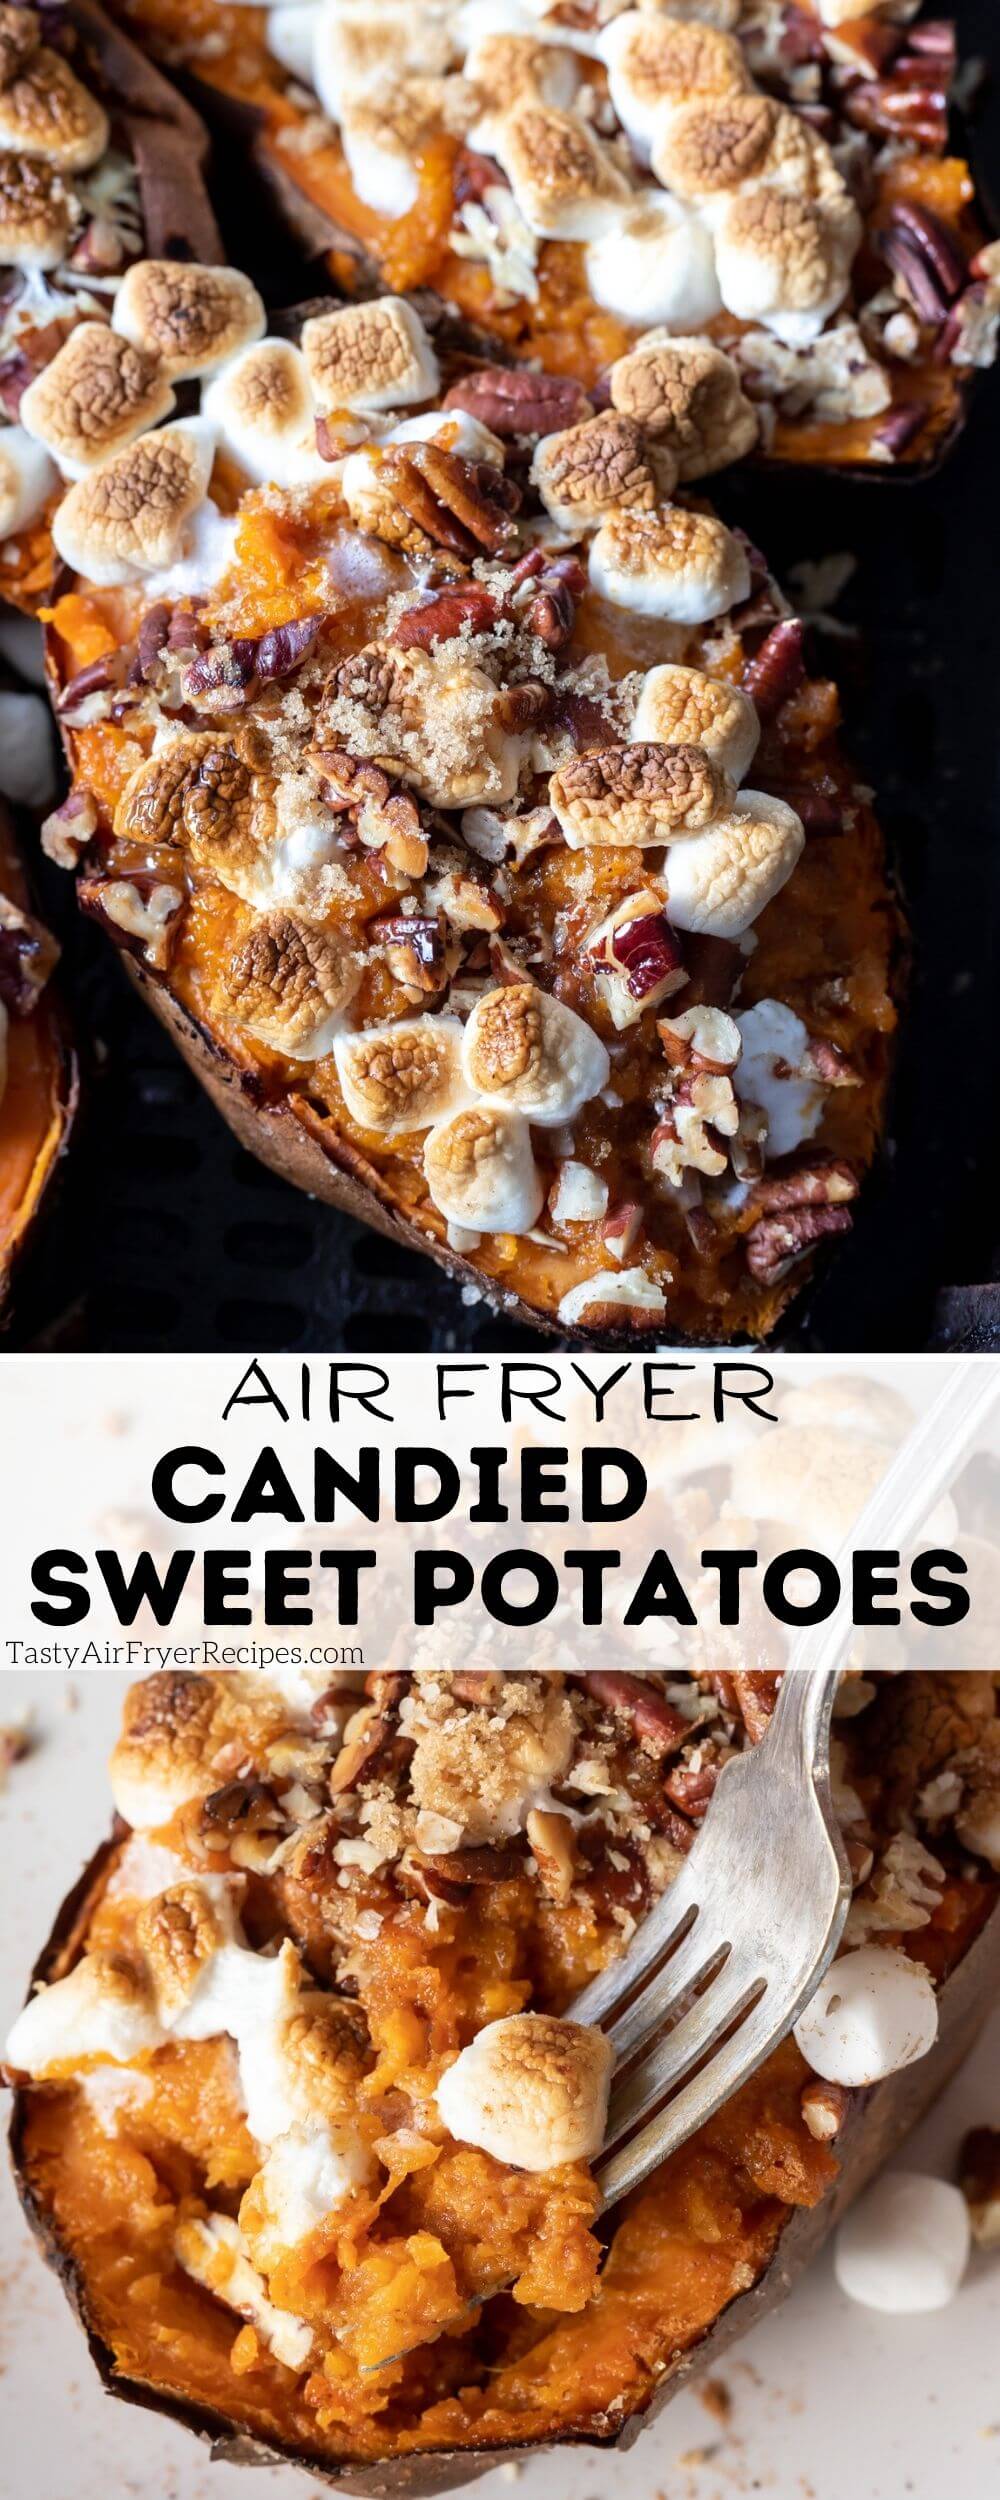 Air Fryer Candied Sweet Potatoes - Tasty Air Fryer Recipes